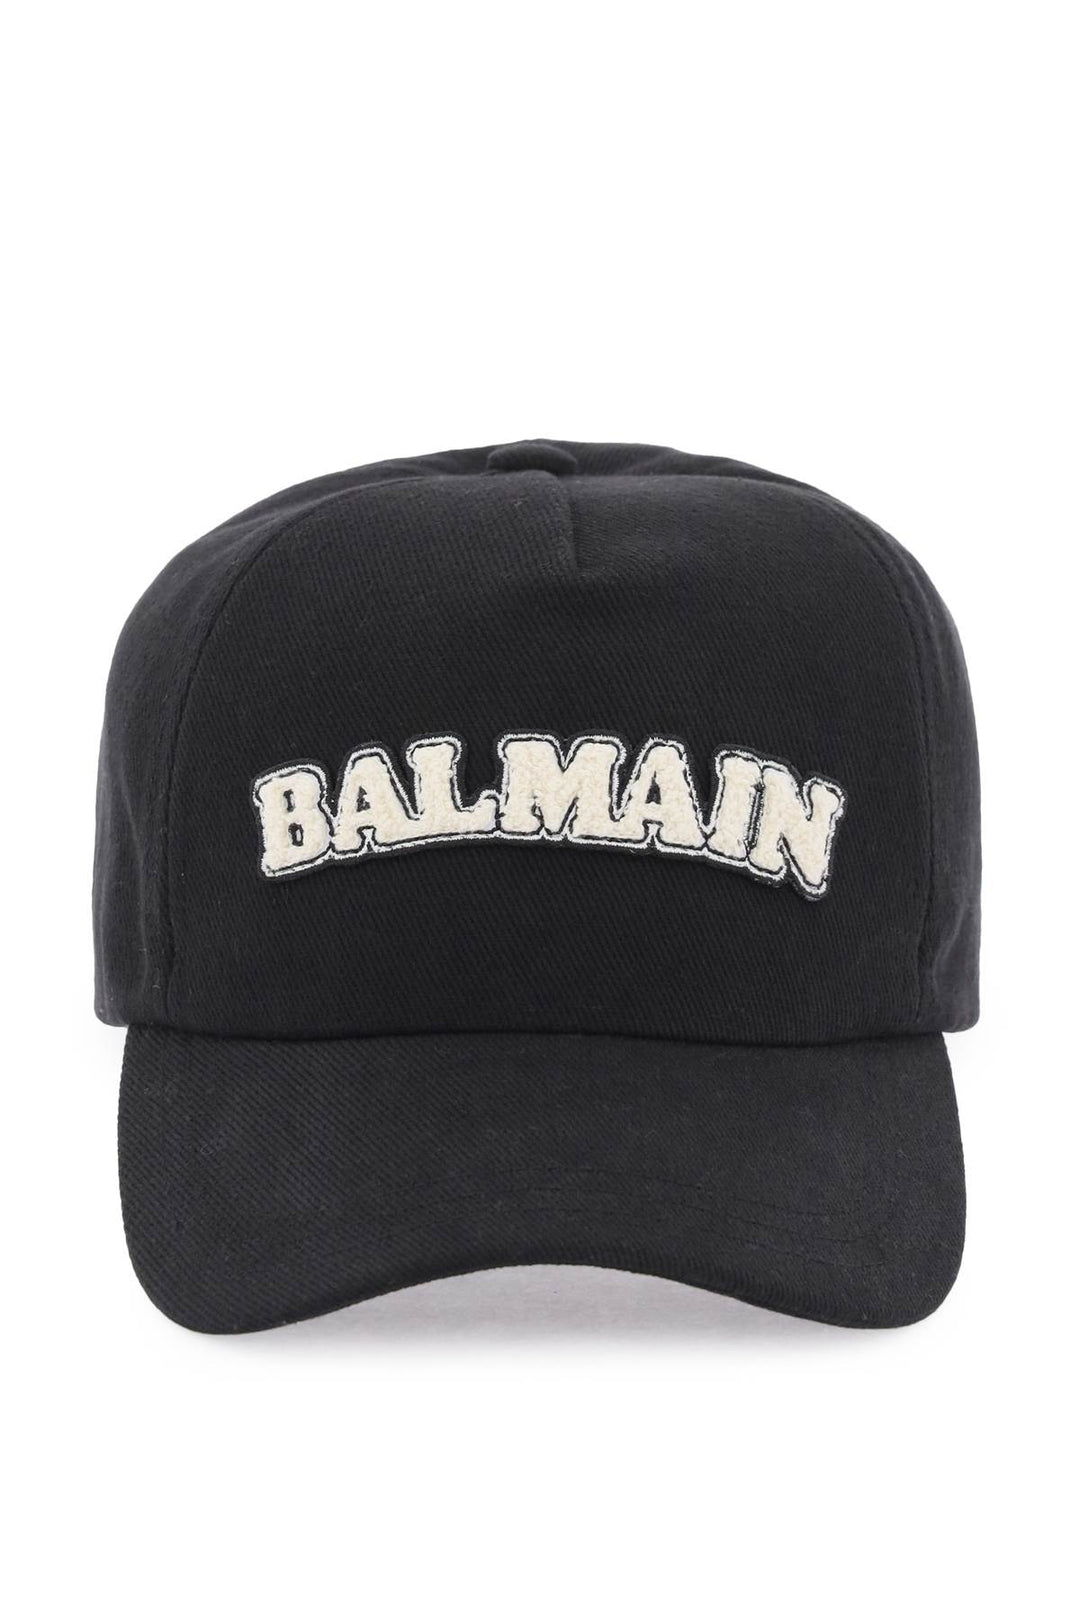 Balmain Terry Logo Baseball Cap   Black